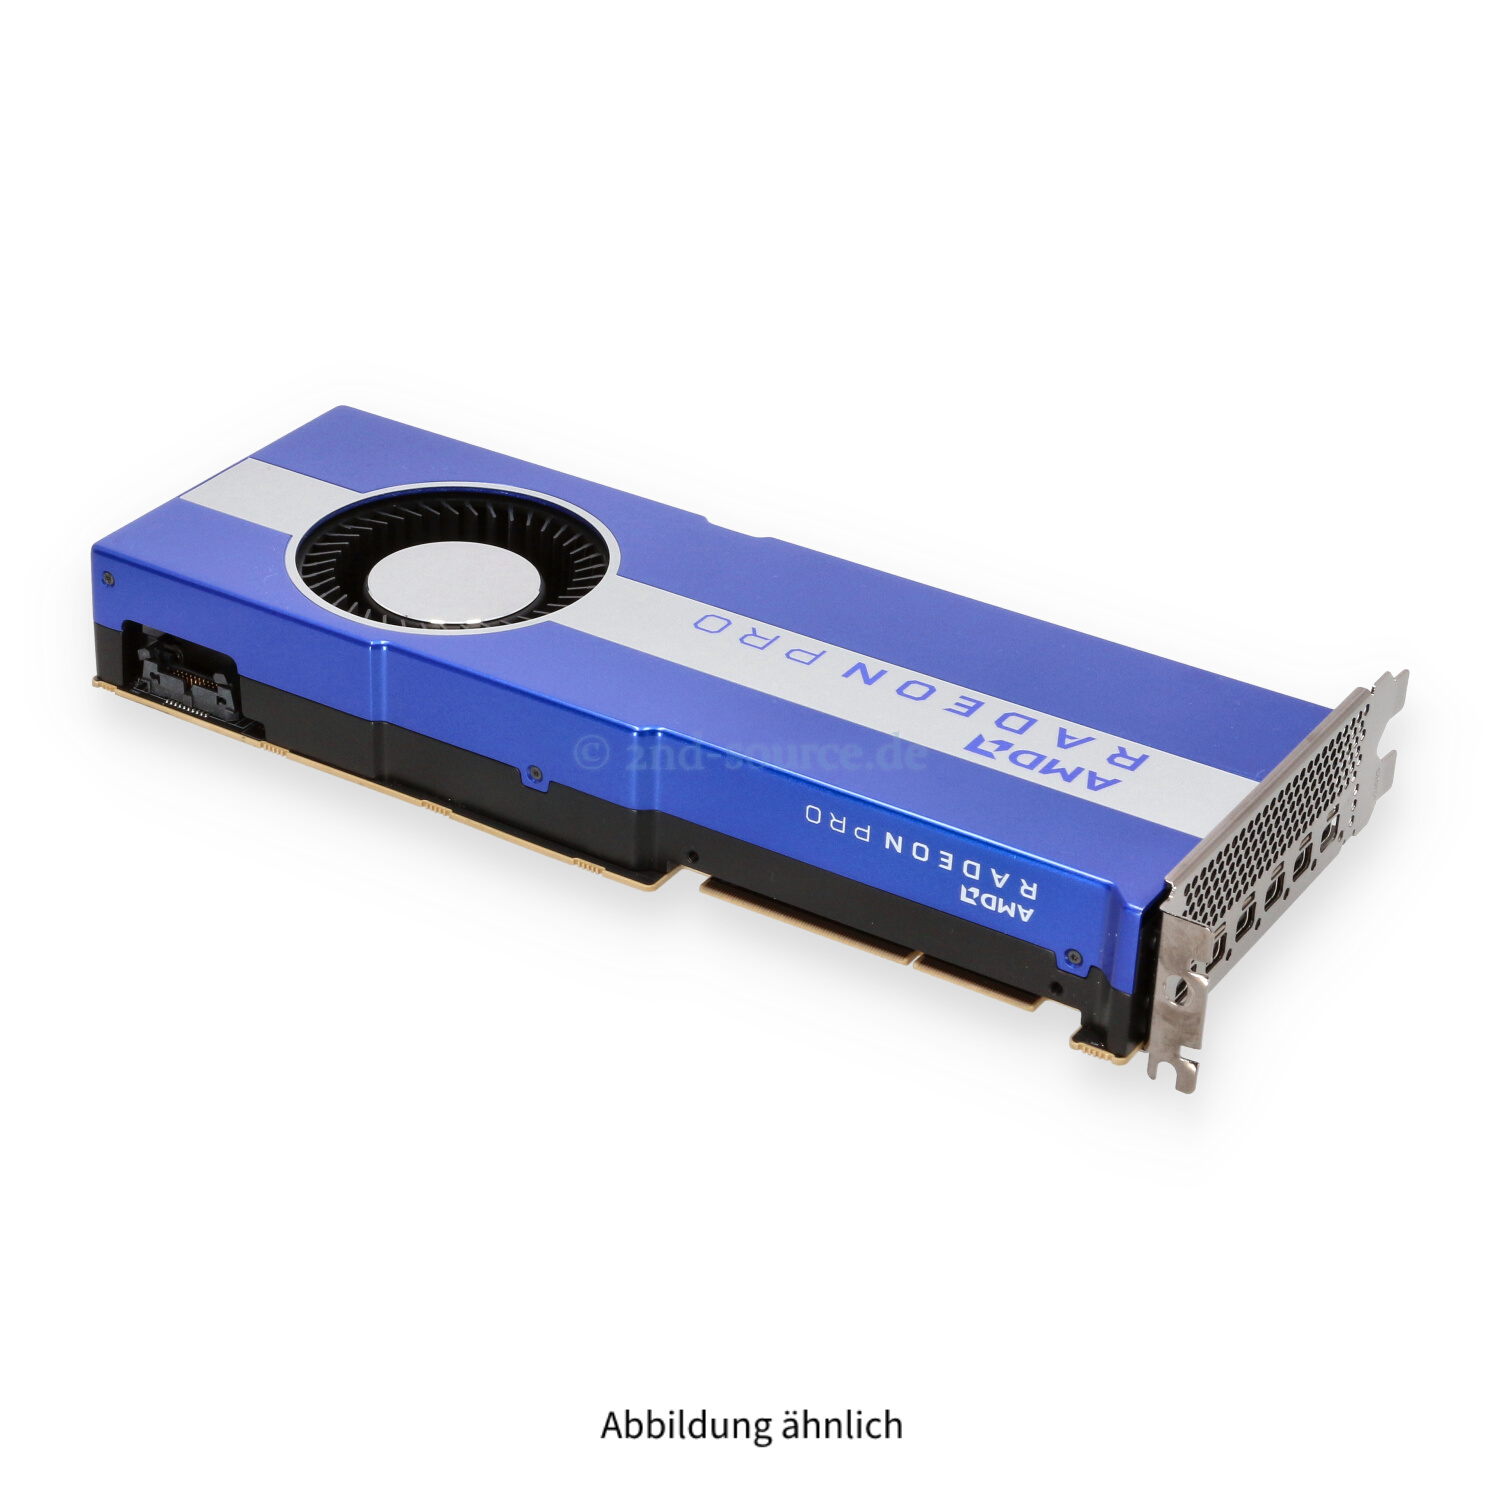 AMD Radeon Pro VII 16GB HBM2 PCIe x16 Graphics Accelerator Module 102D1640600